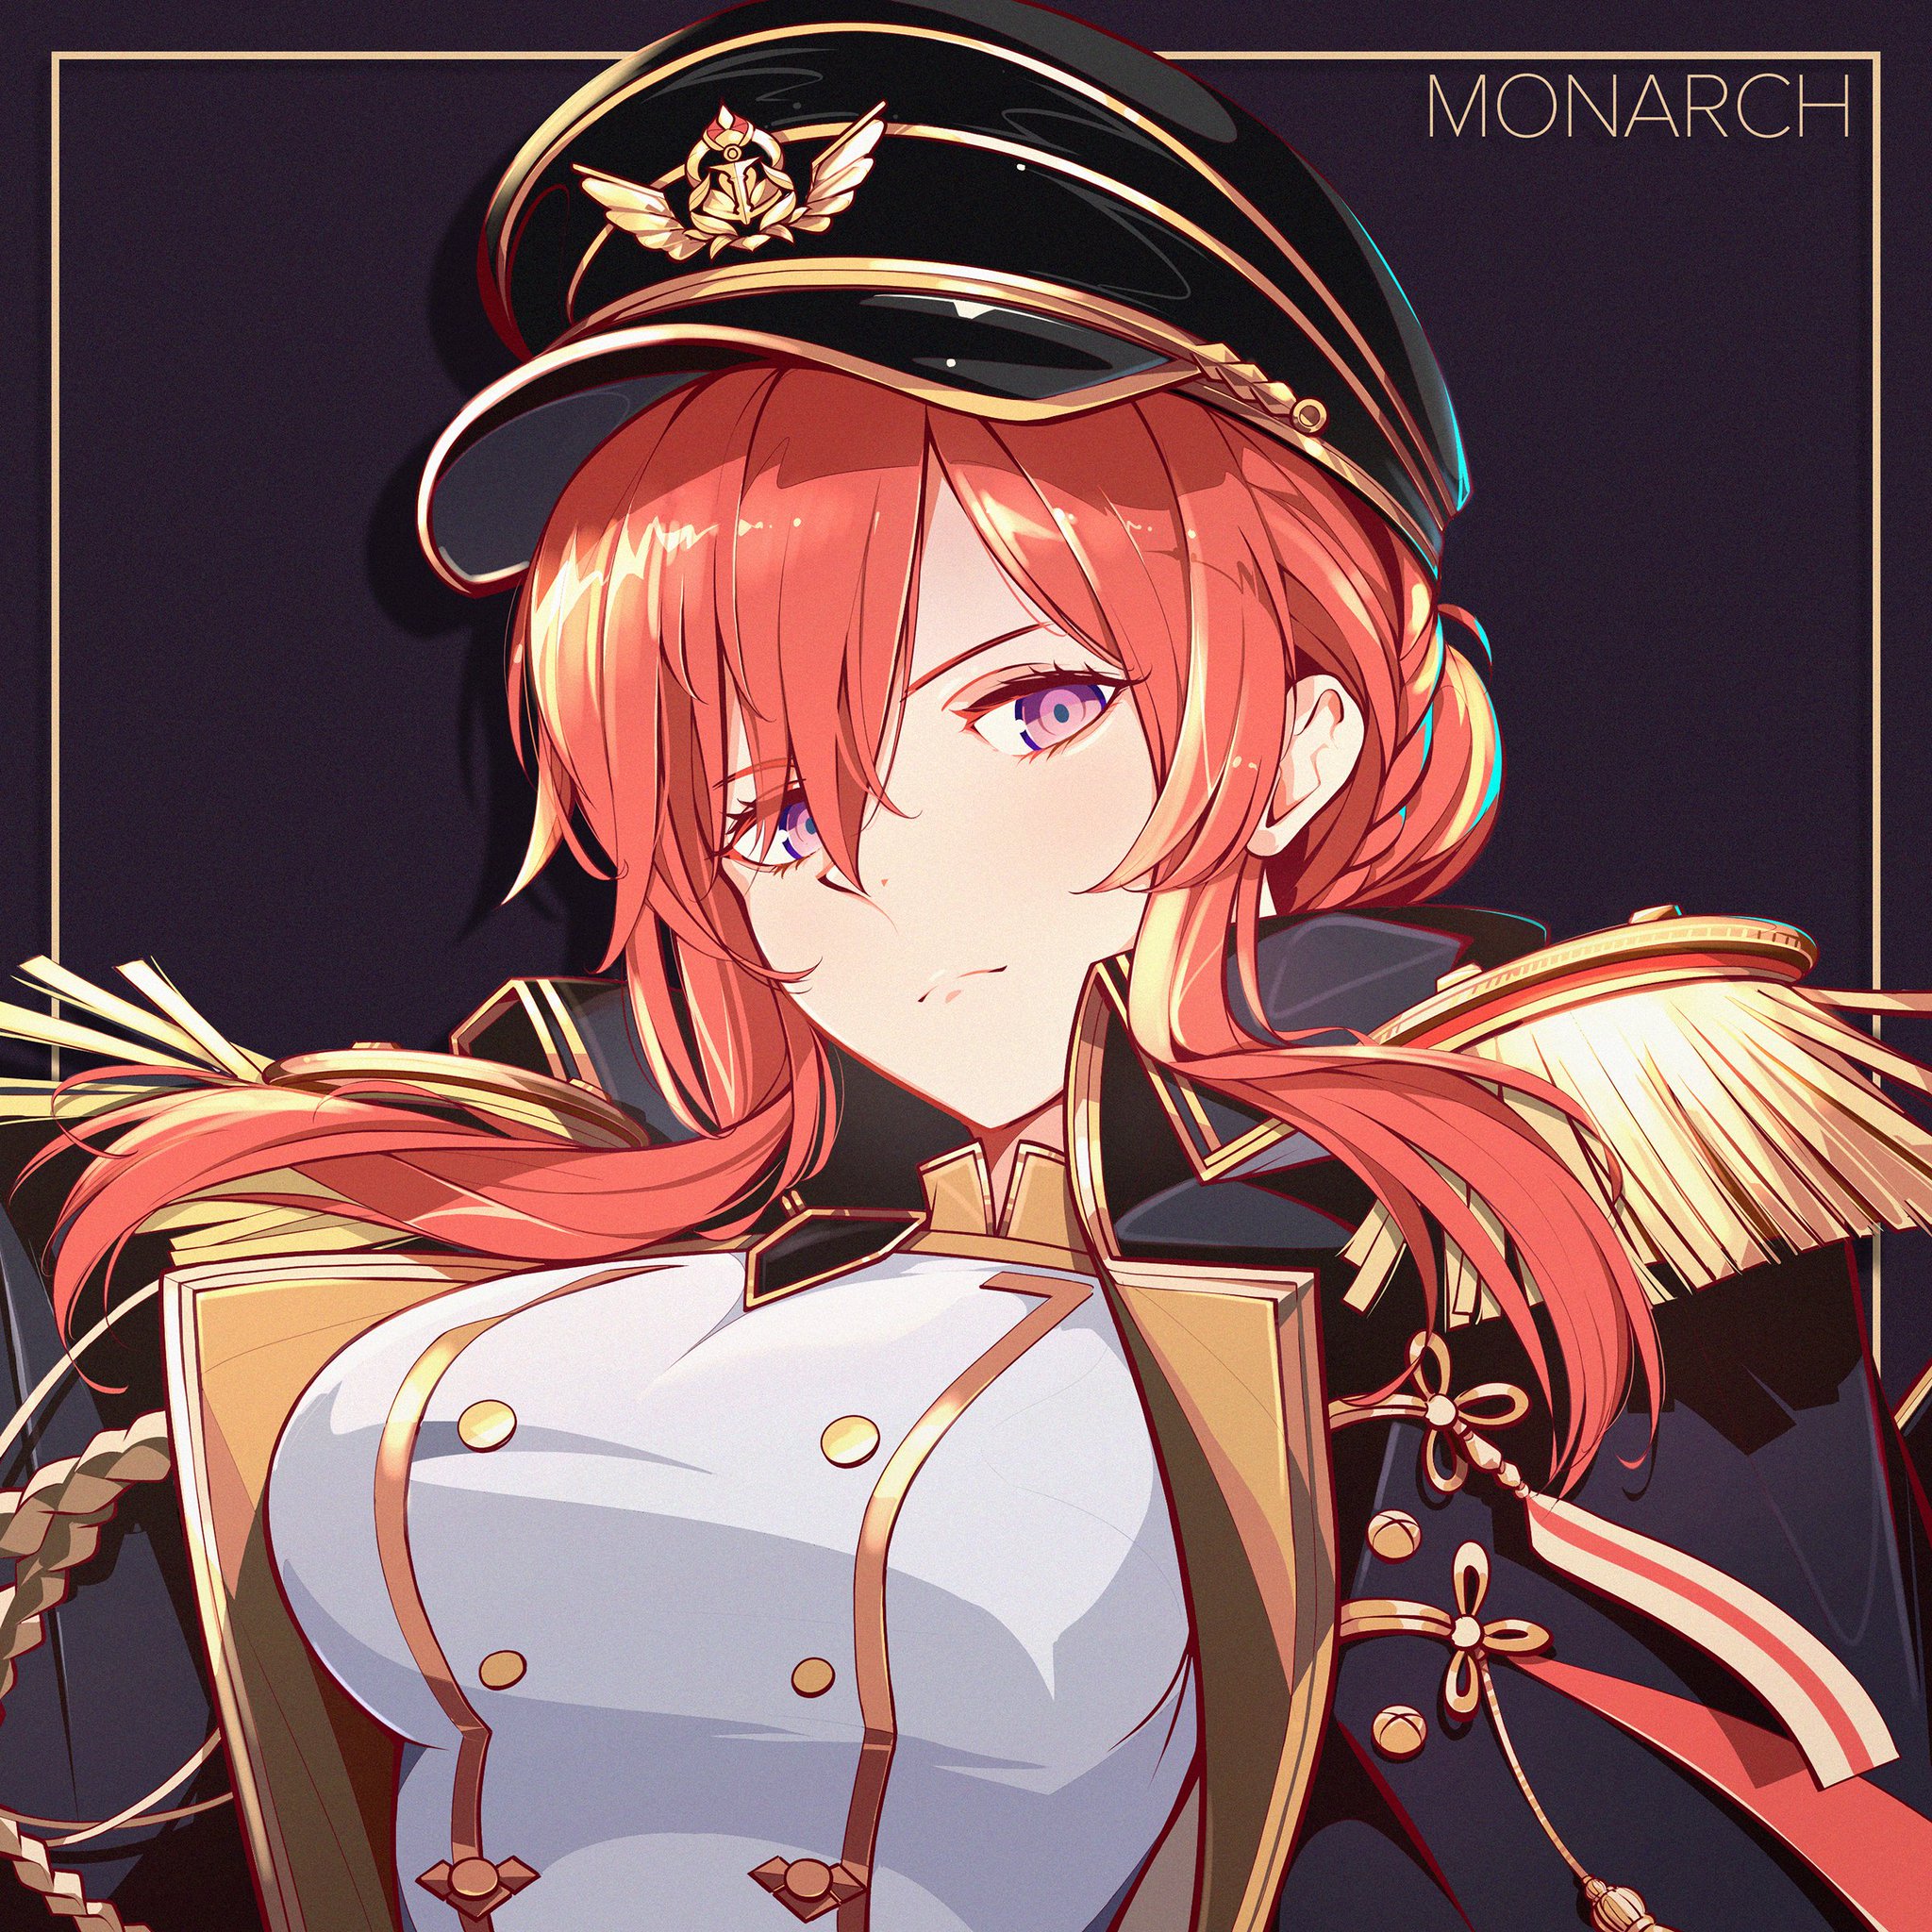 “HMS Monarch
#AzurLane #アズールレーン” .